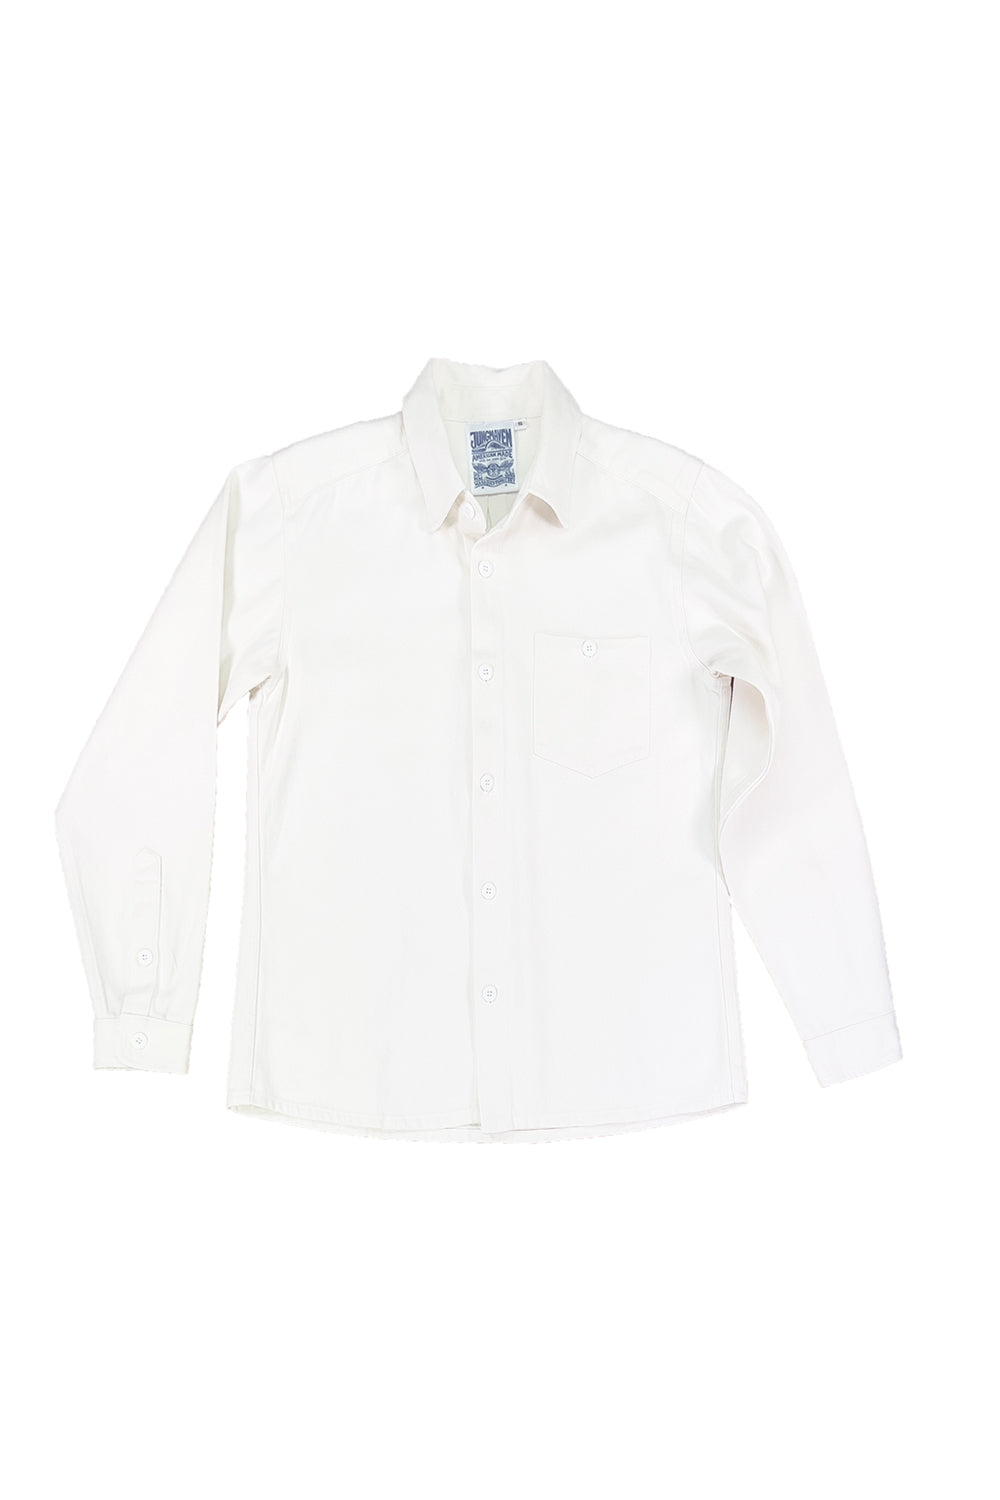 Topanga Shirt | Jungmaven Hemp Clothing & Accessories / Color: White